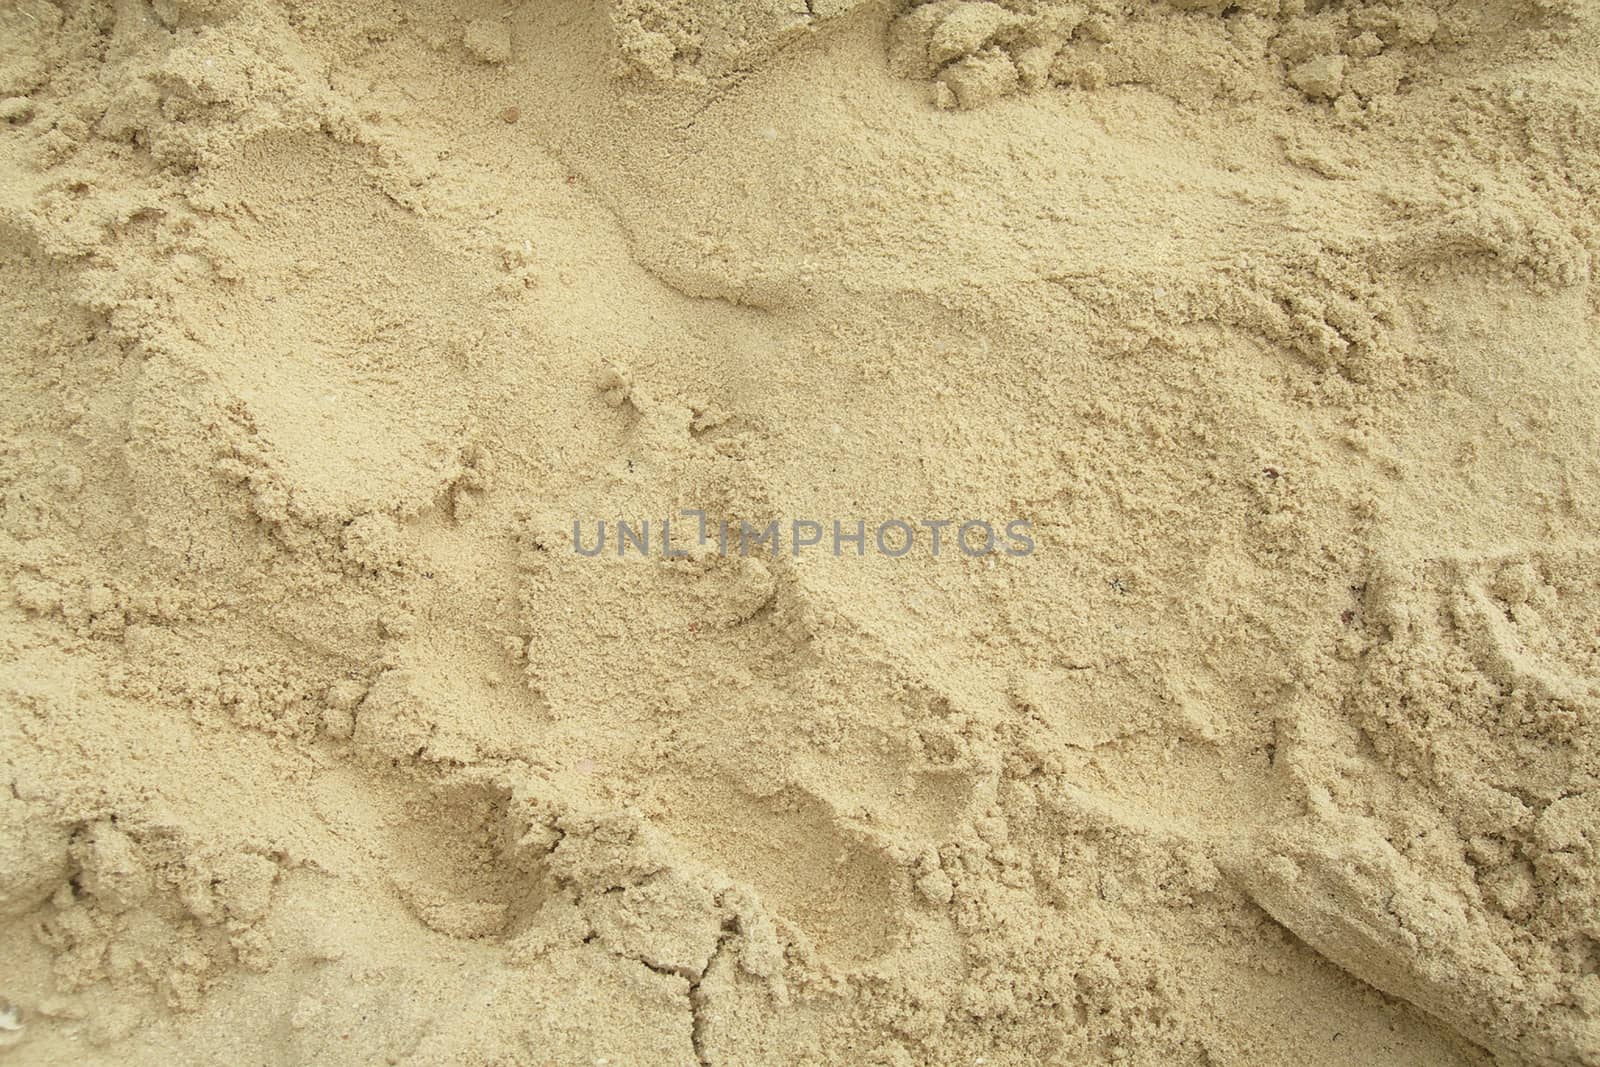 Caribbean beach sand close-up by raul_ruiz